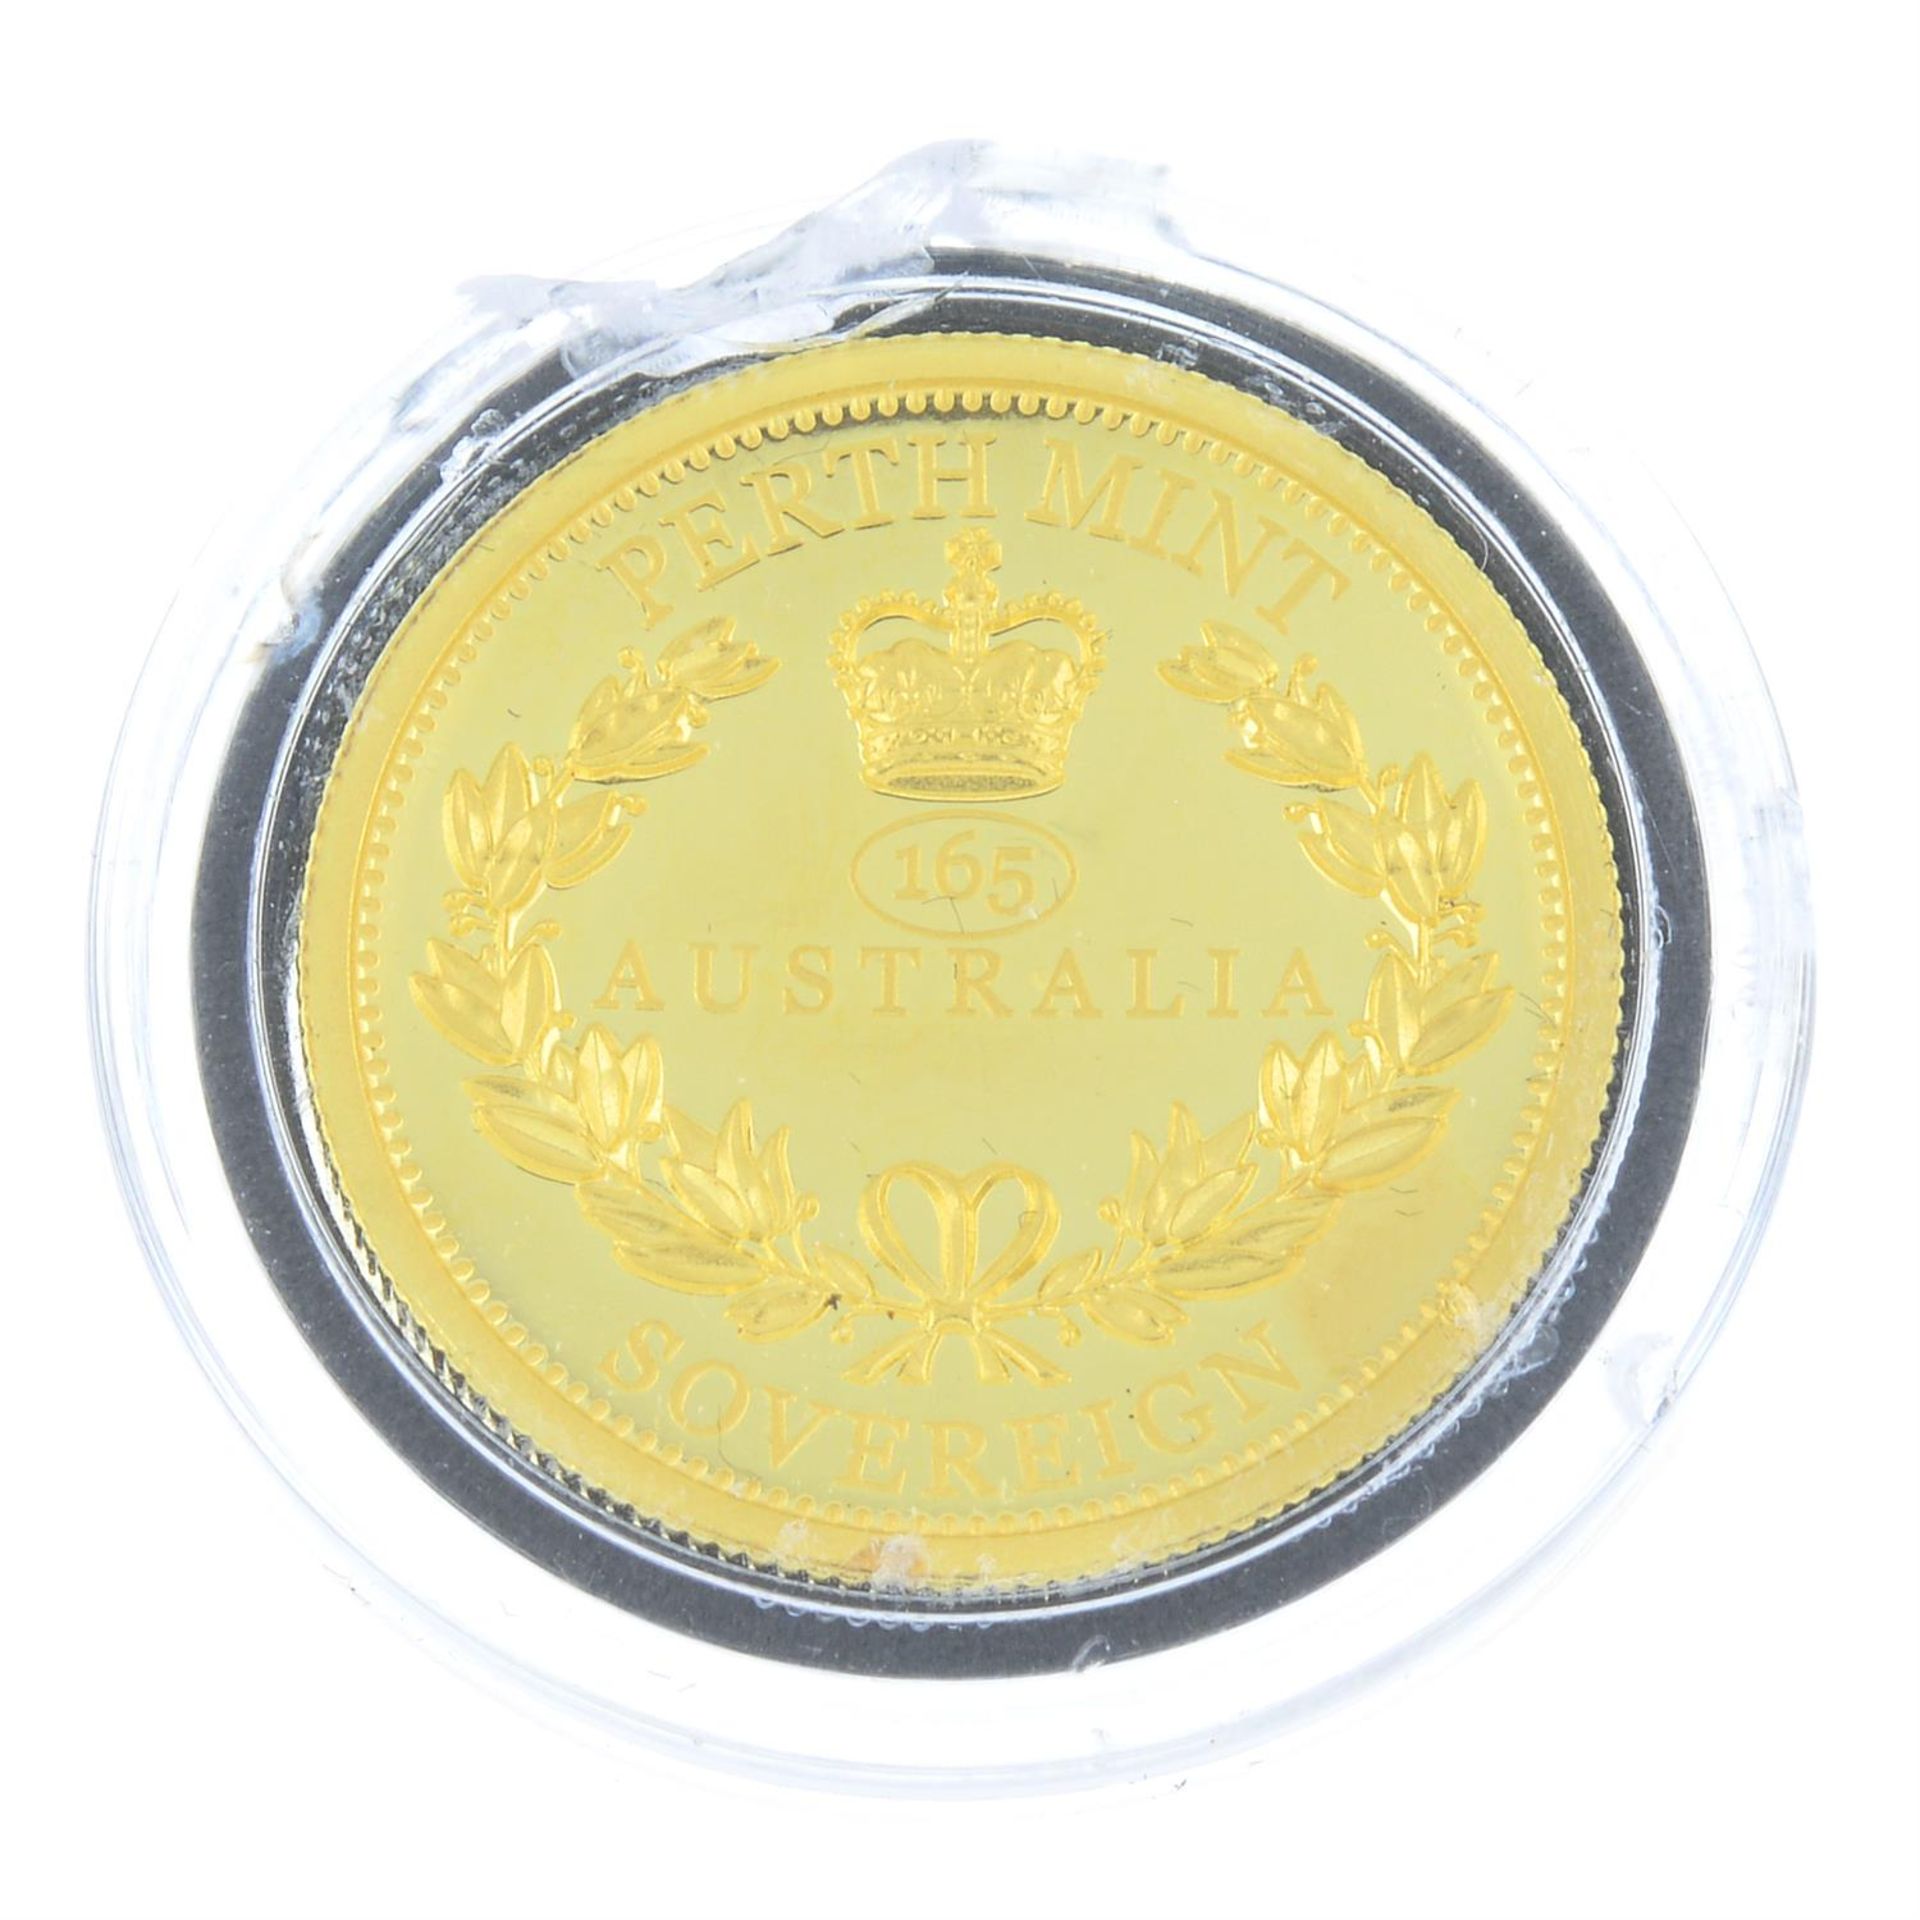 Australia, Elizabeth II, gold proof piedfort 50-Dollars Sovereign 2020. - Image 2 of 4